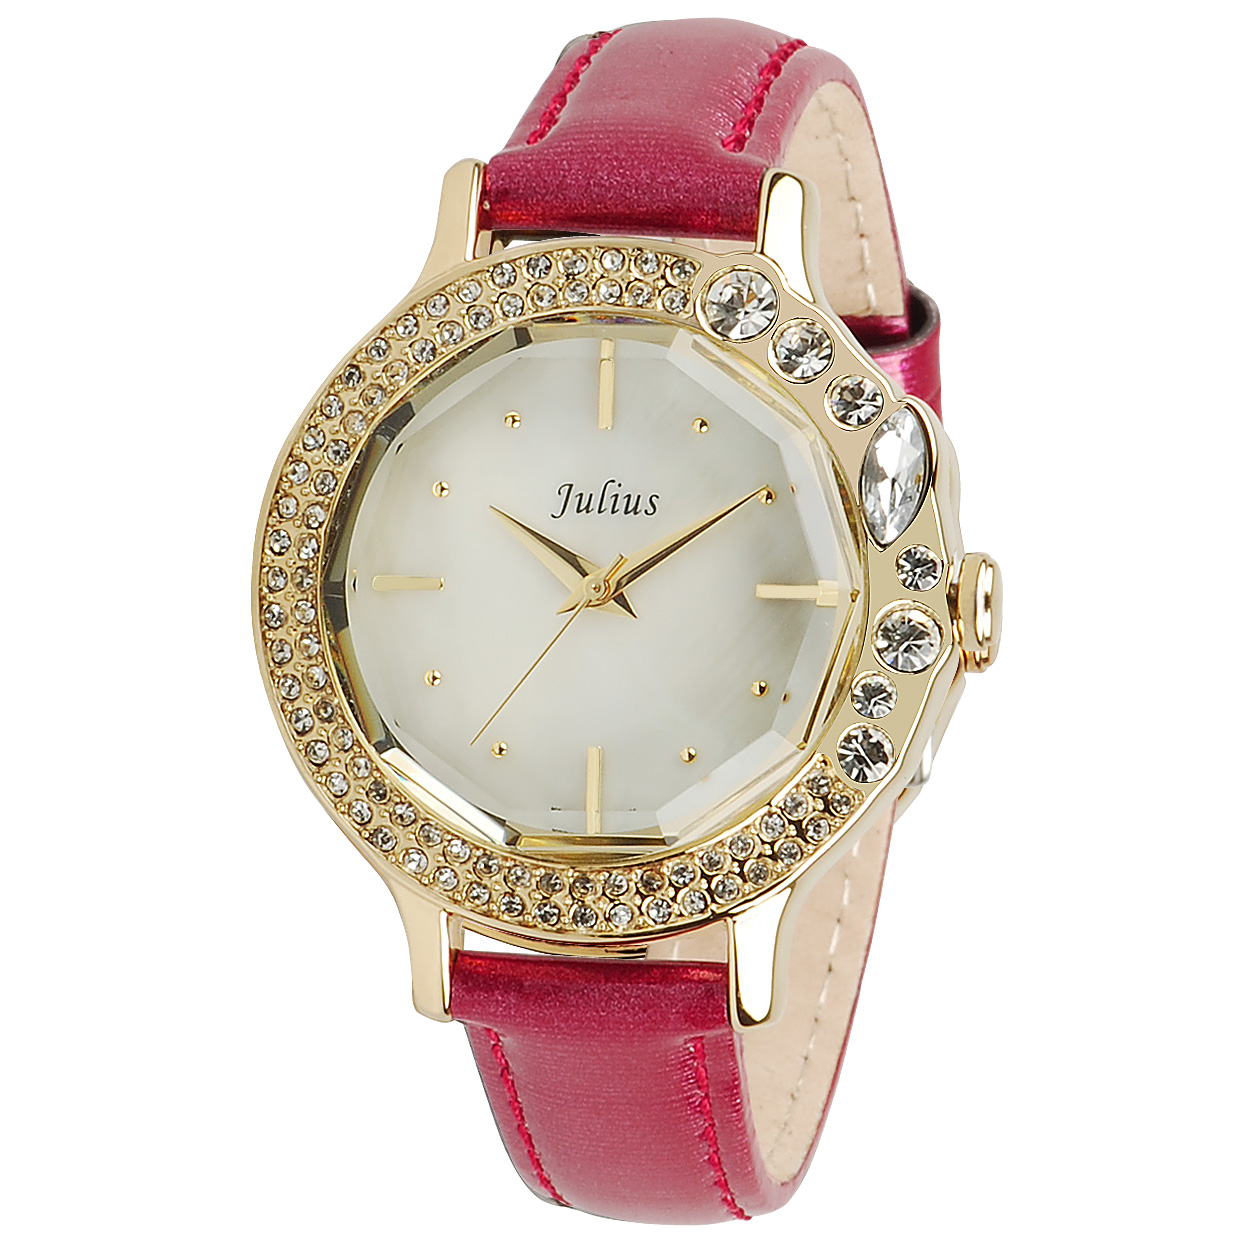 julius 时尚表 女生手表 红色皮带表 水晶女表 潮流大牌 女士手表